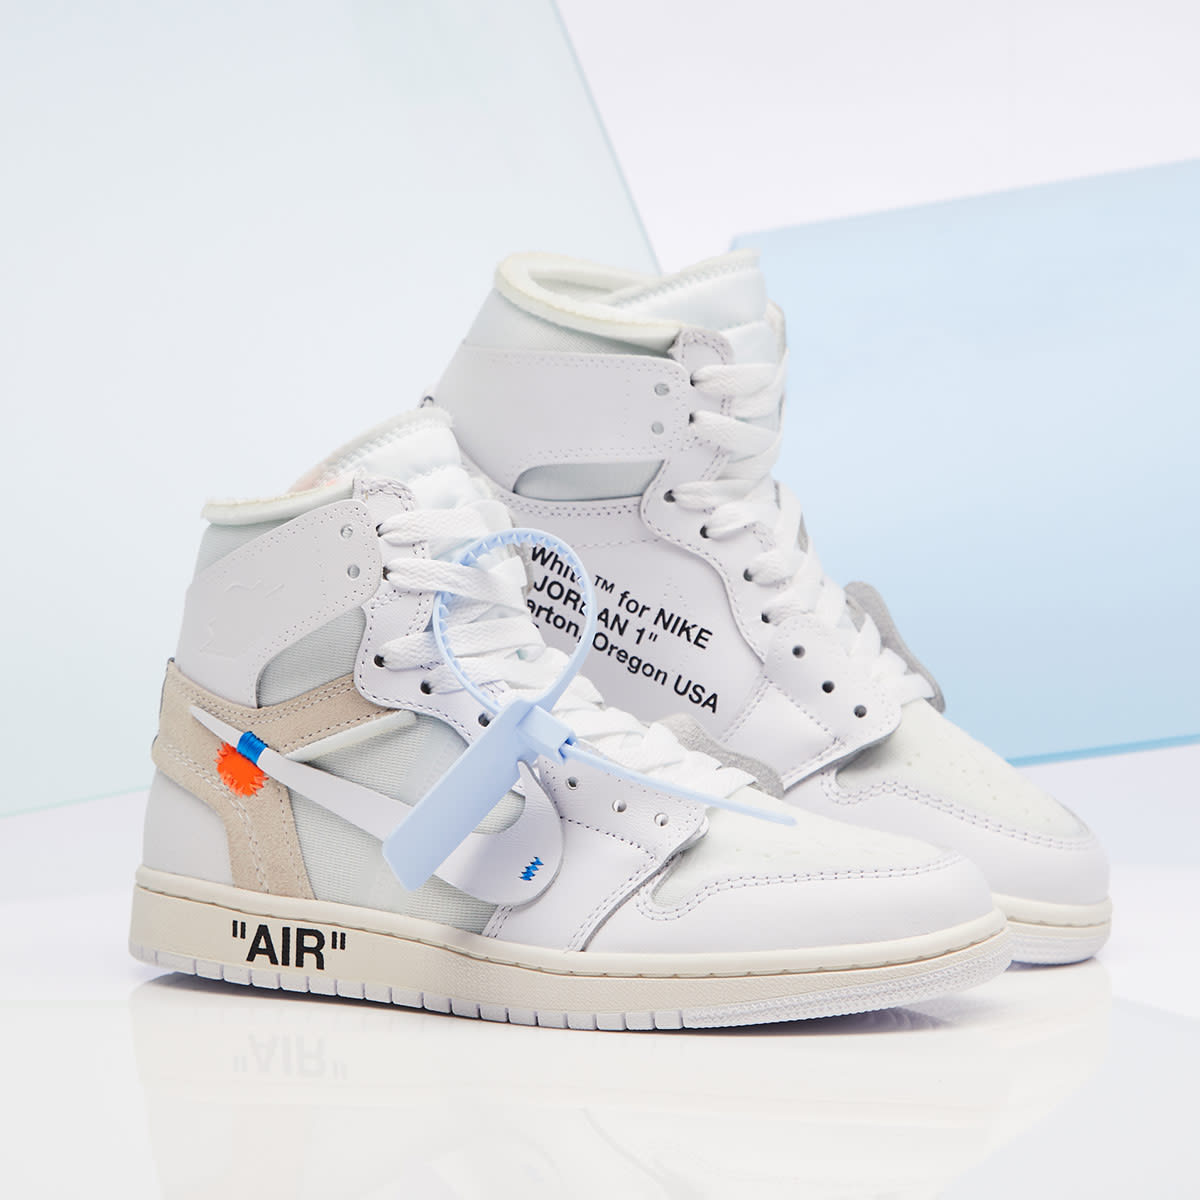 Off-White™ x Air Jordan 1 Release Date